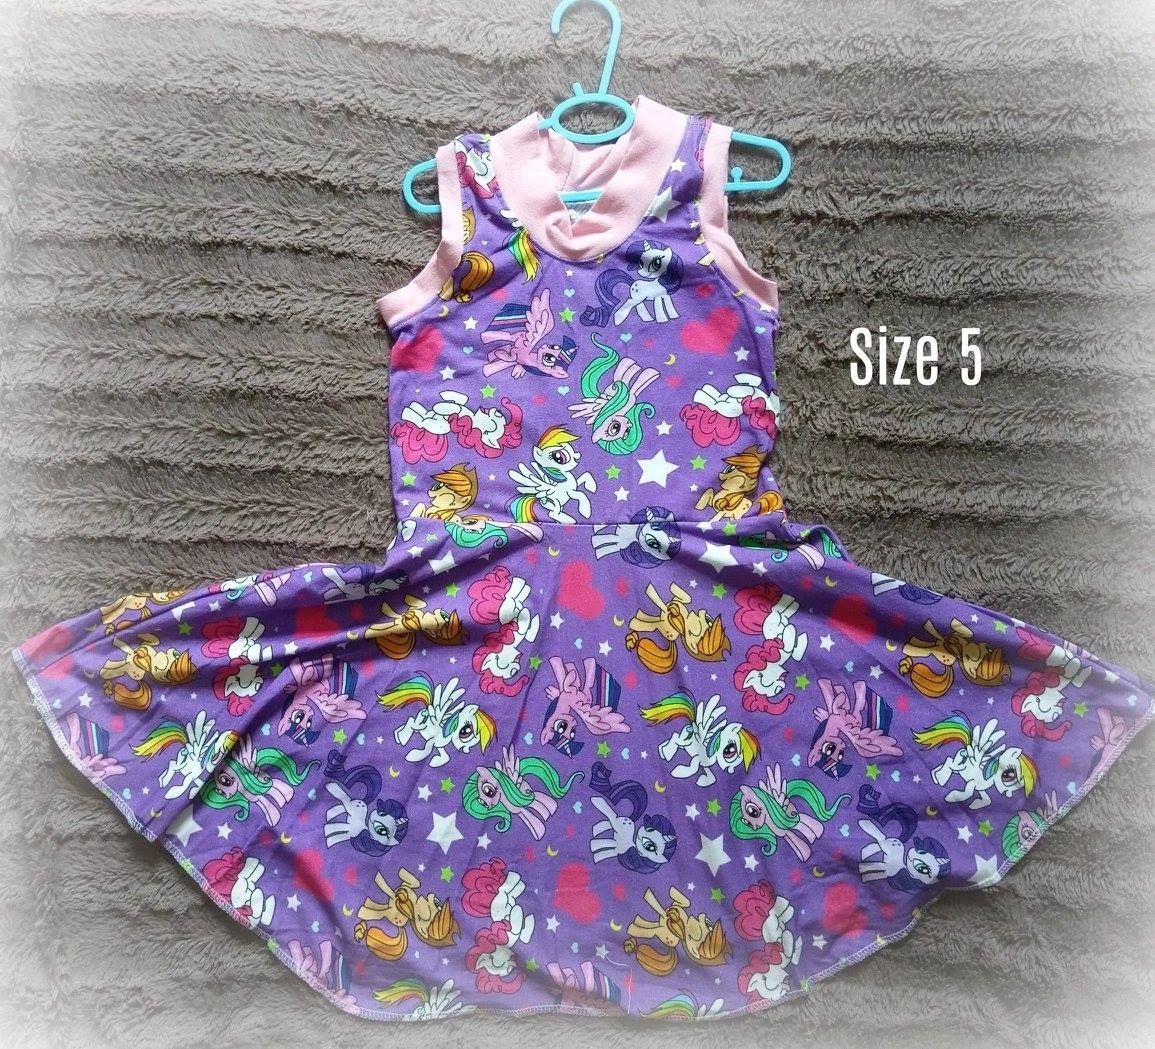 SIZE 5 Handmade Dress